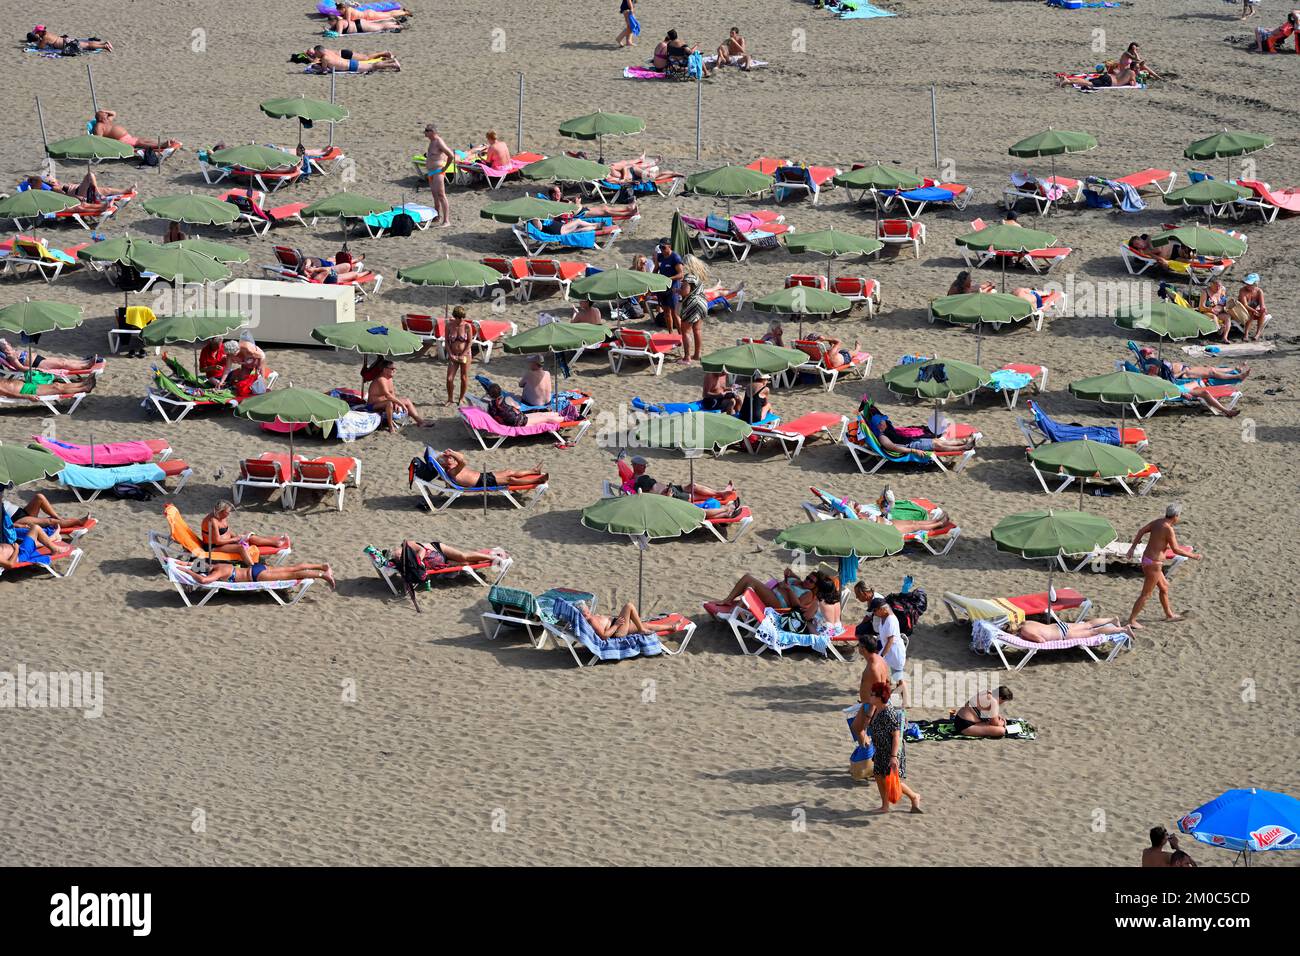 Playa El Veril beach with sunbathers on sand others in the sea, San Agustín,  Las Palmas, Gran Canaria Stock Photo - Alamy